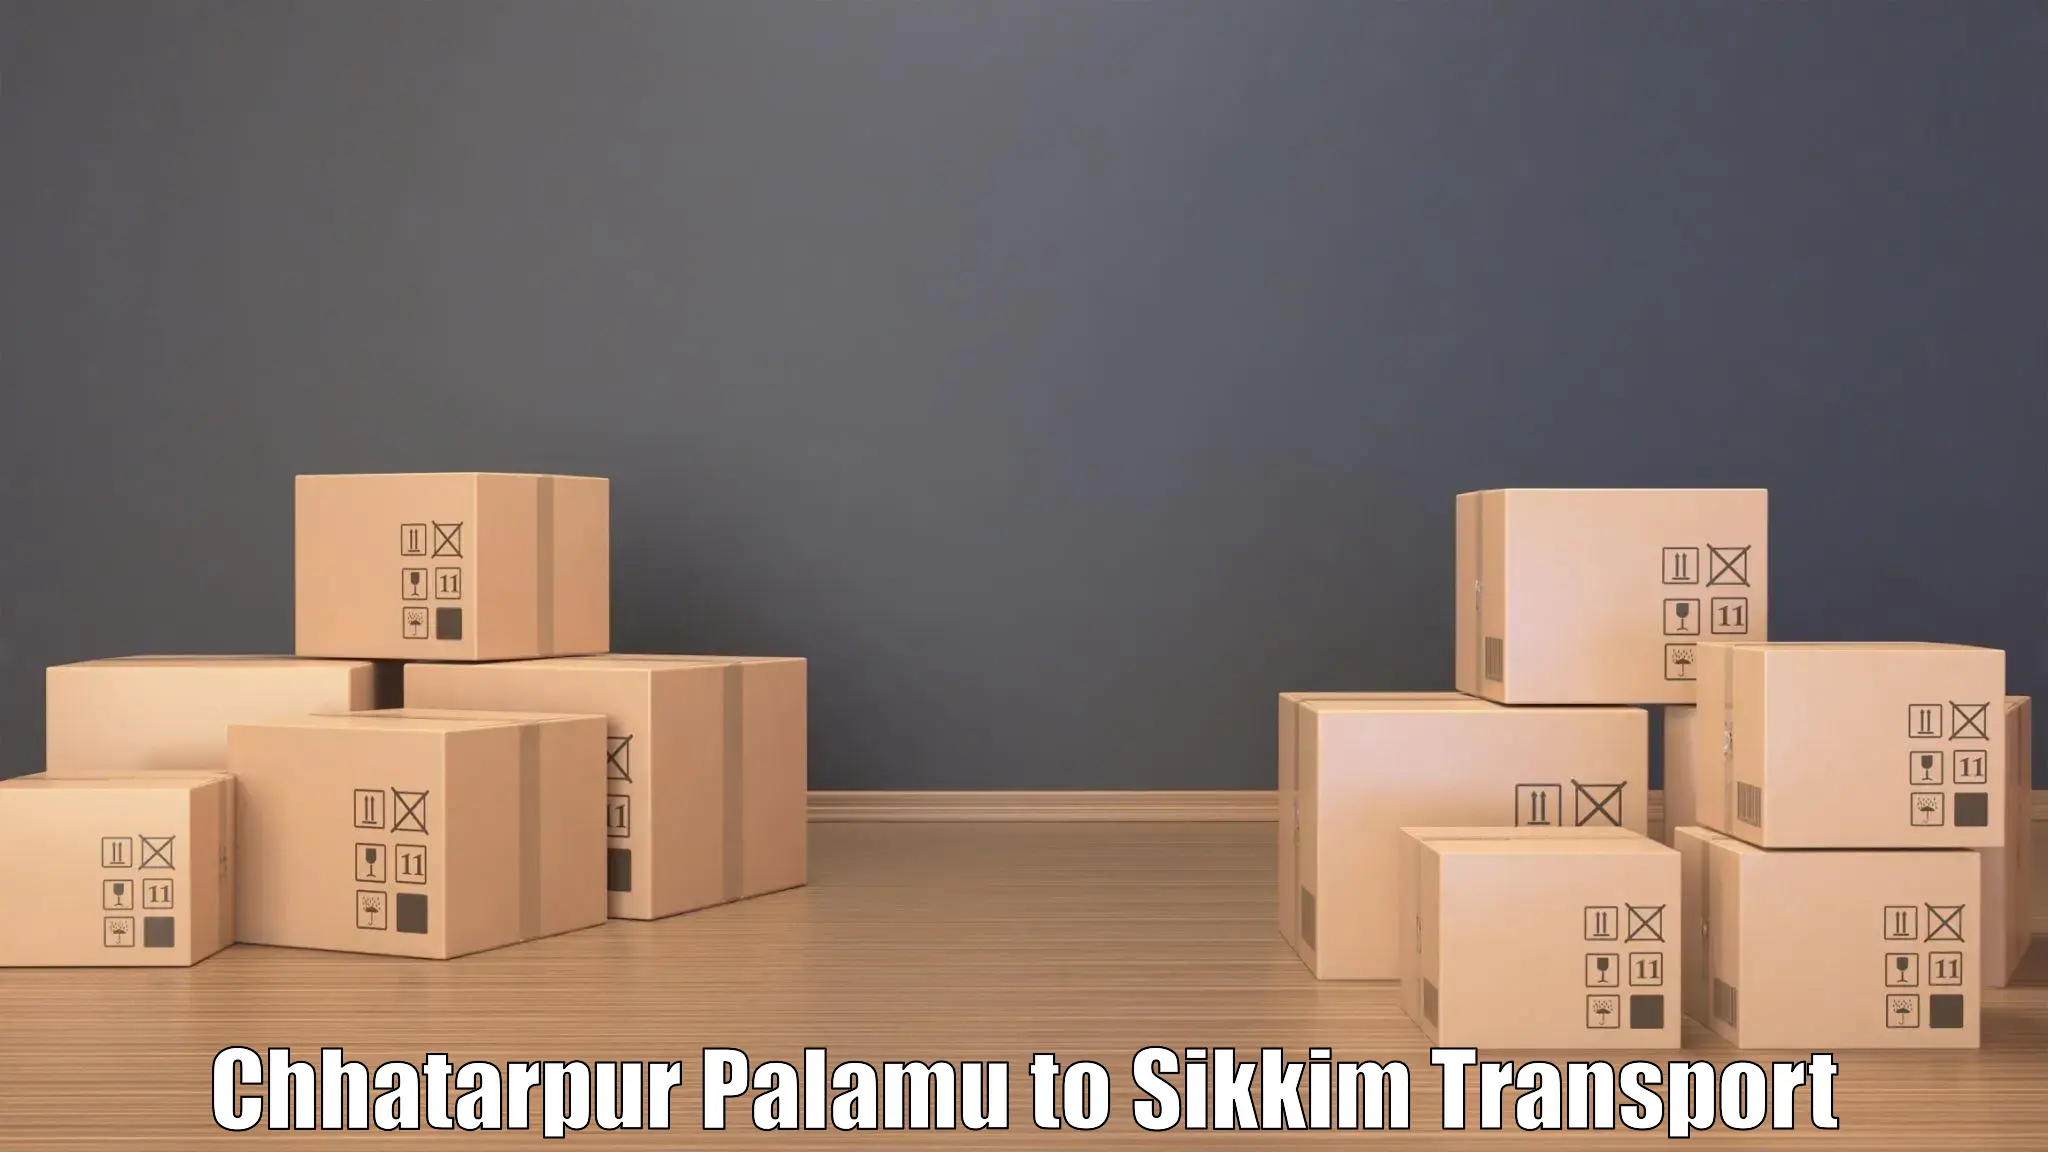 Truck transport companies in India Chhatarpur Palamu to East Sikkim